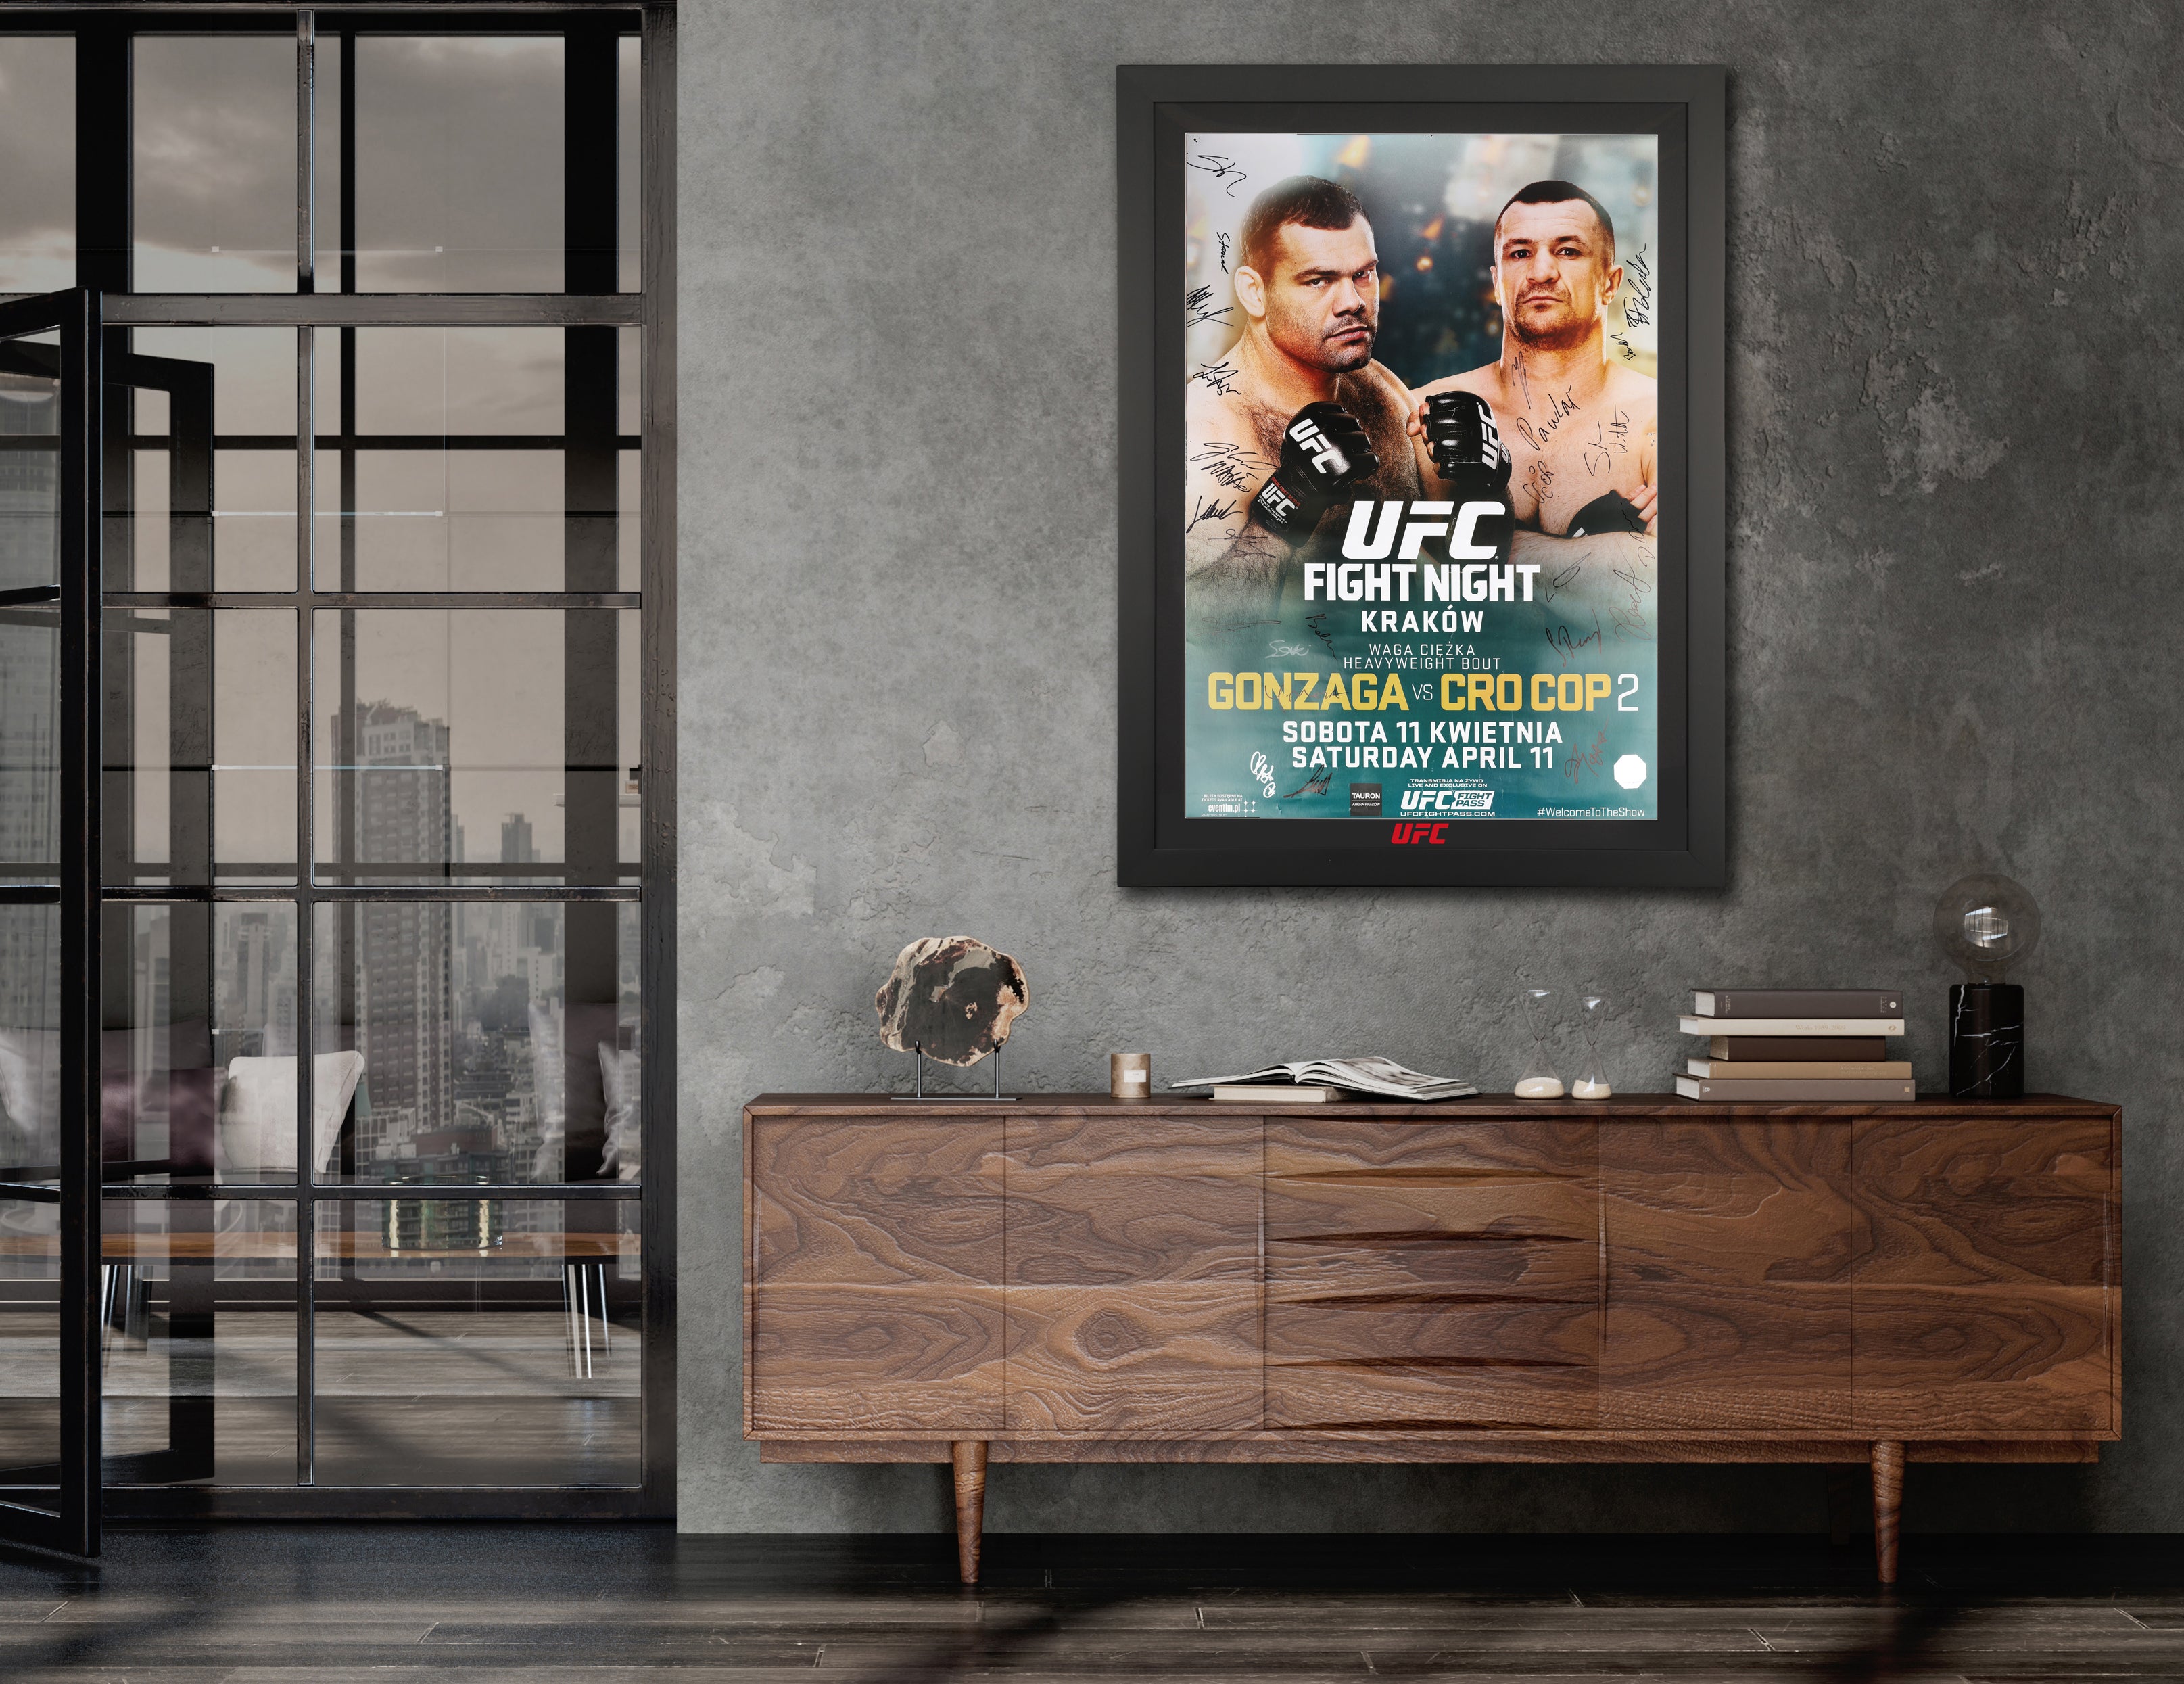 UFC Fight Night: Gonzaga vs Cro Cop 2 Autographed Event Poster